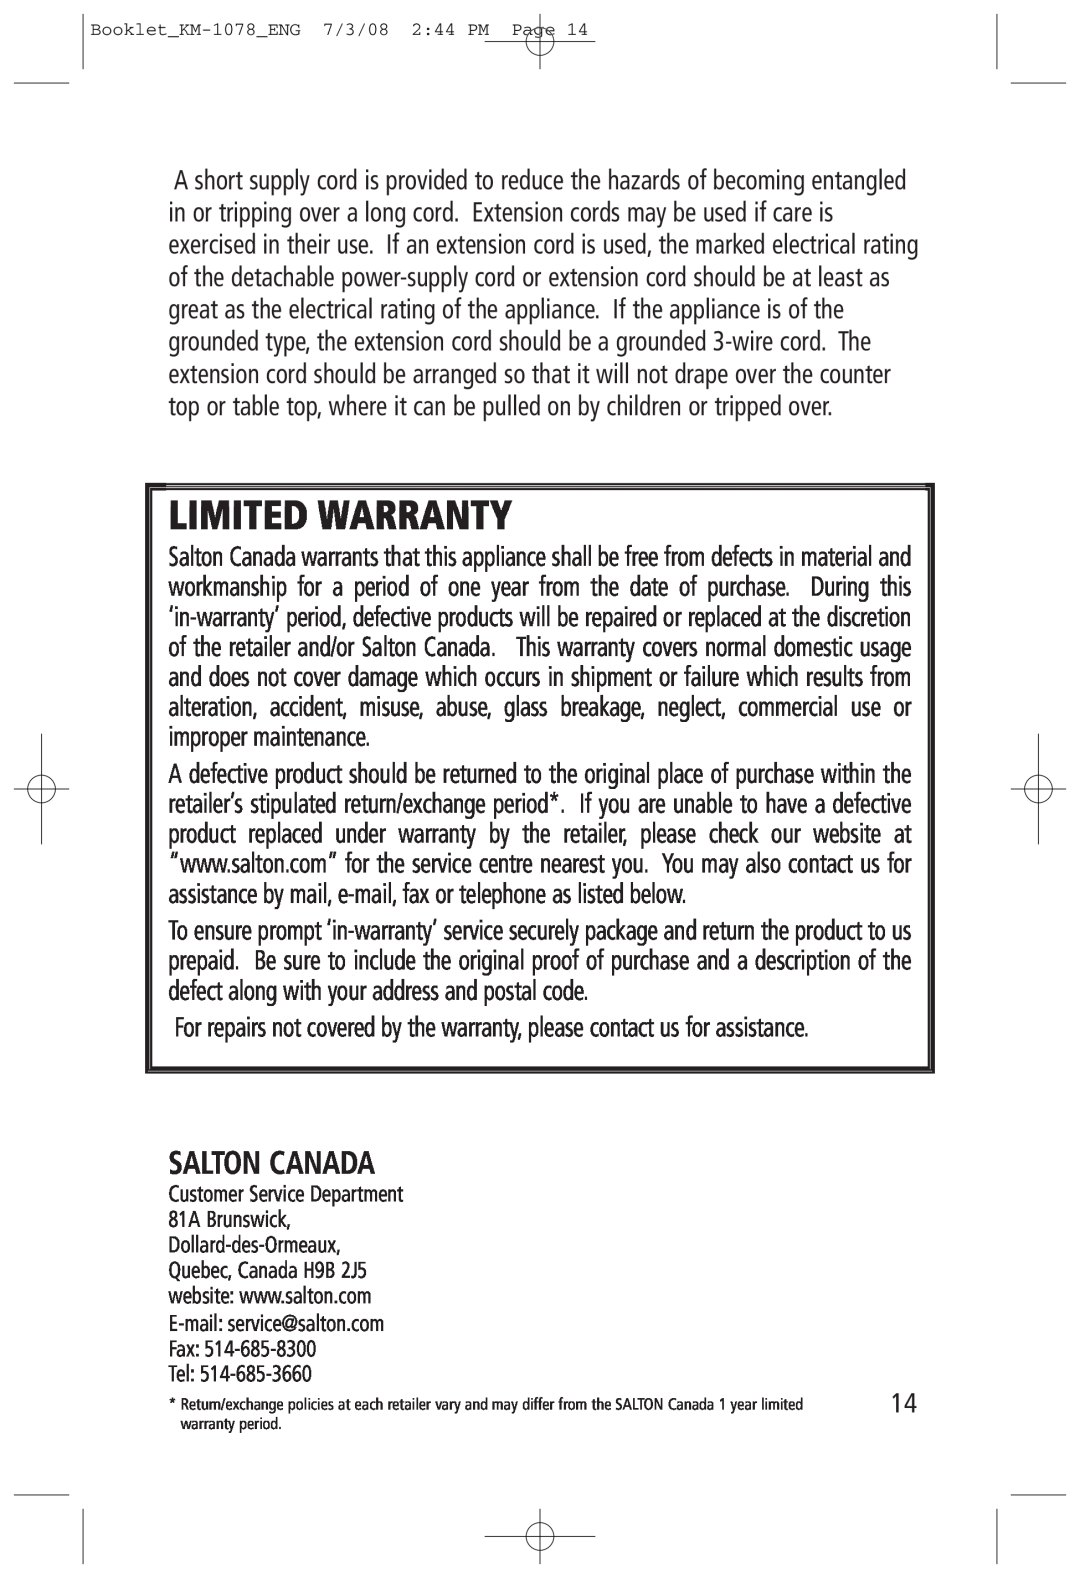 Salton KM-1078 manual Salton Canada, Limited Warranty 